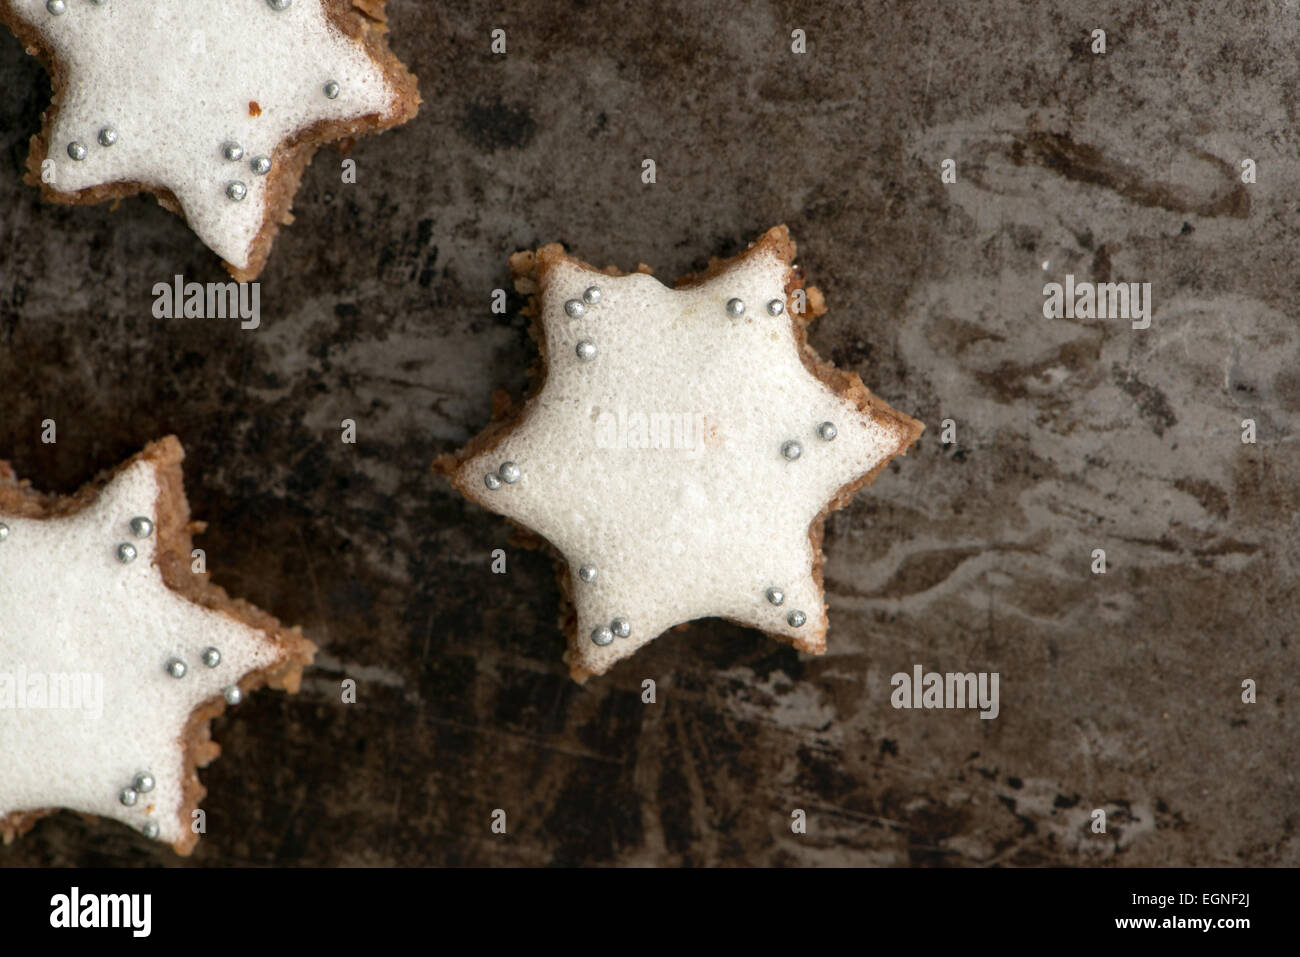 Cinnamon stars on a baking tray Stock Photo